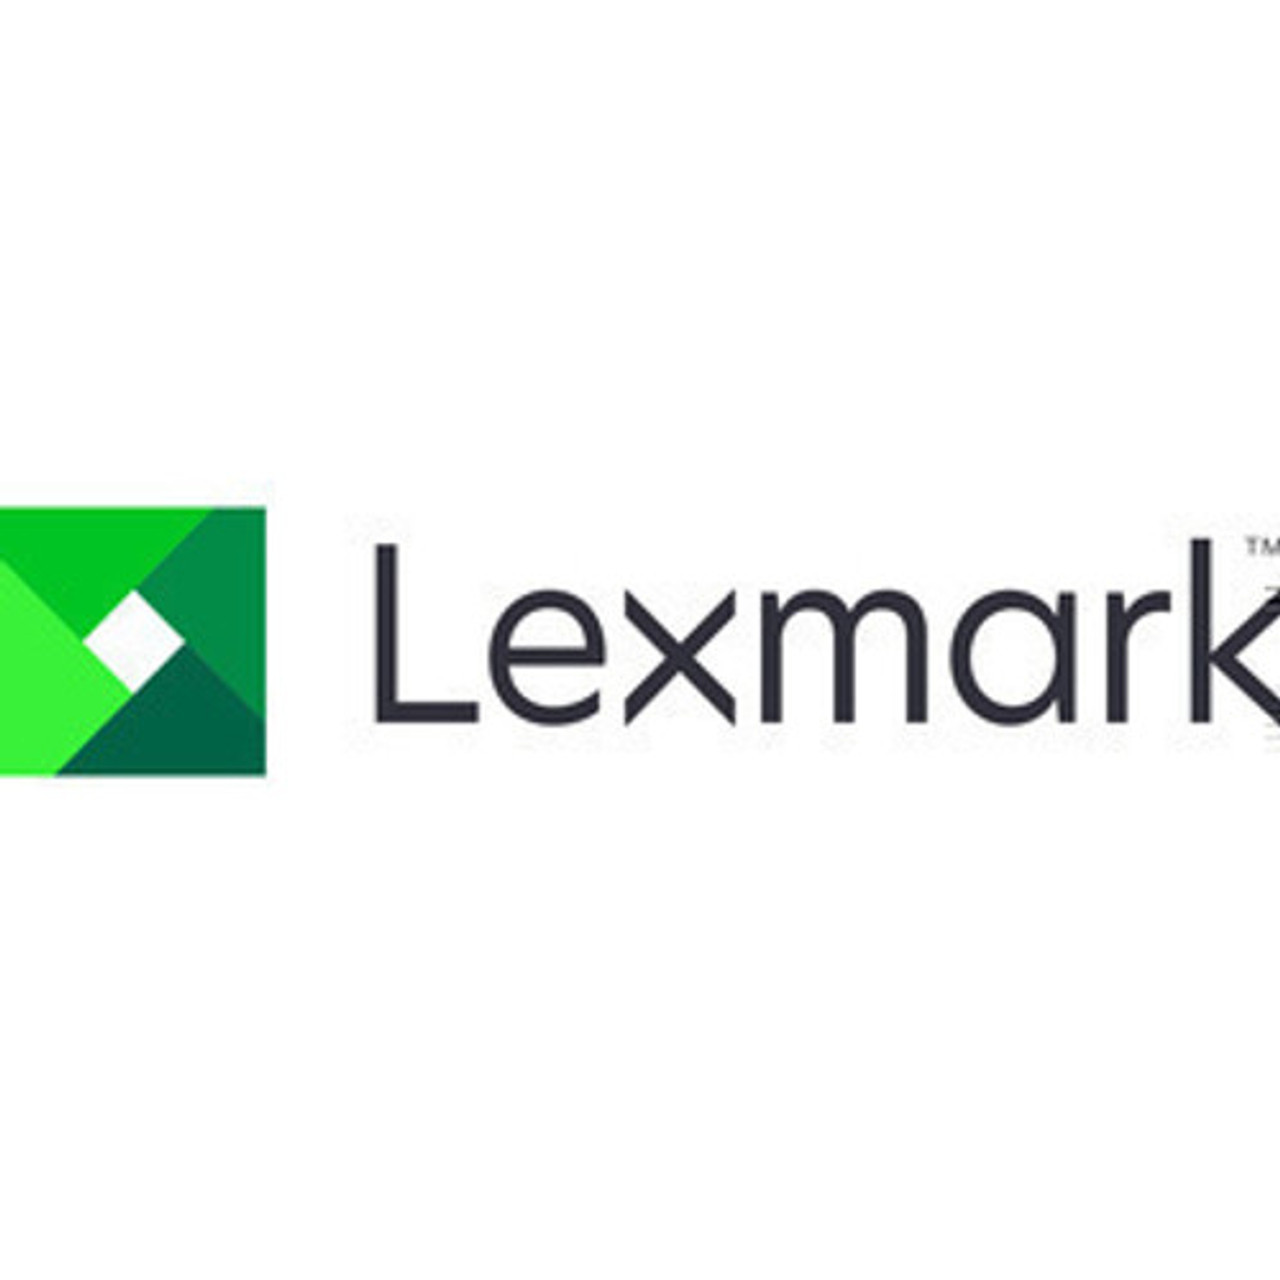 Lexmark 3YR RNWL ADVANCED EXCHANGE  SVCSMS631 - 2374796